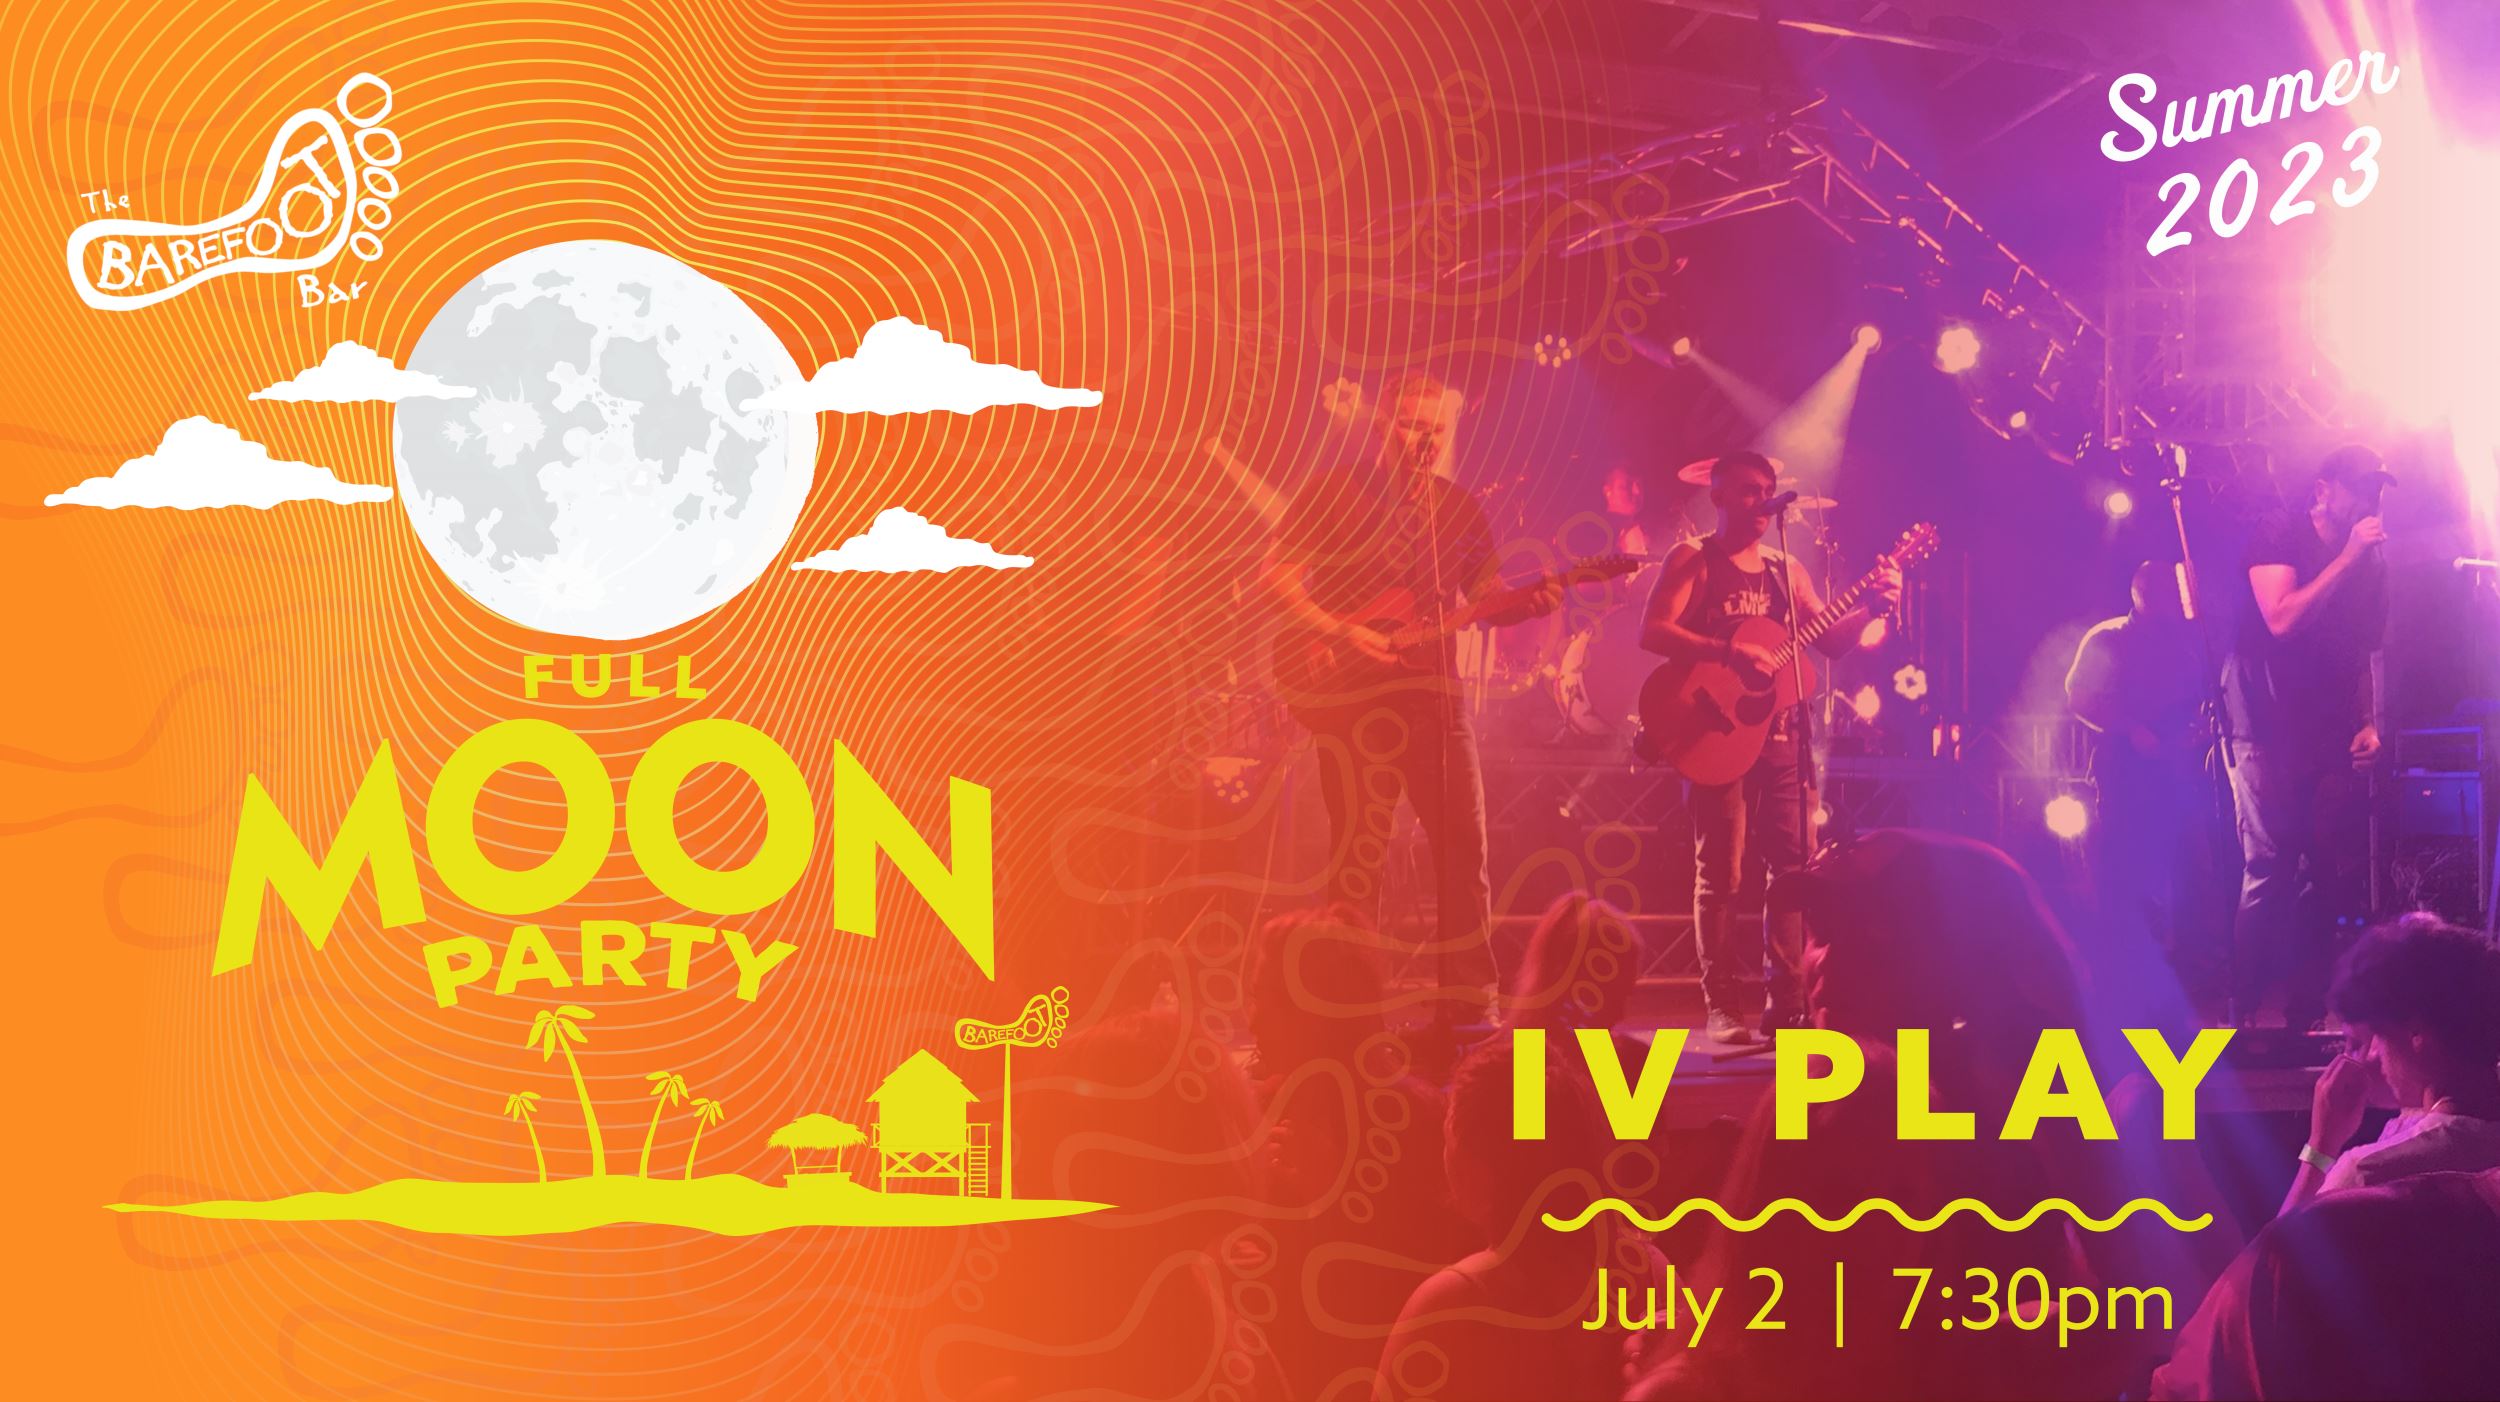 Full Moon Party with IV Play Parks Marina at Lake Okoboji